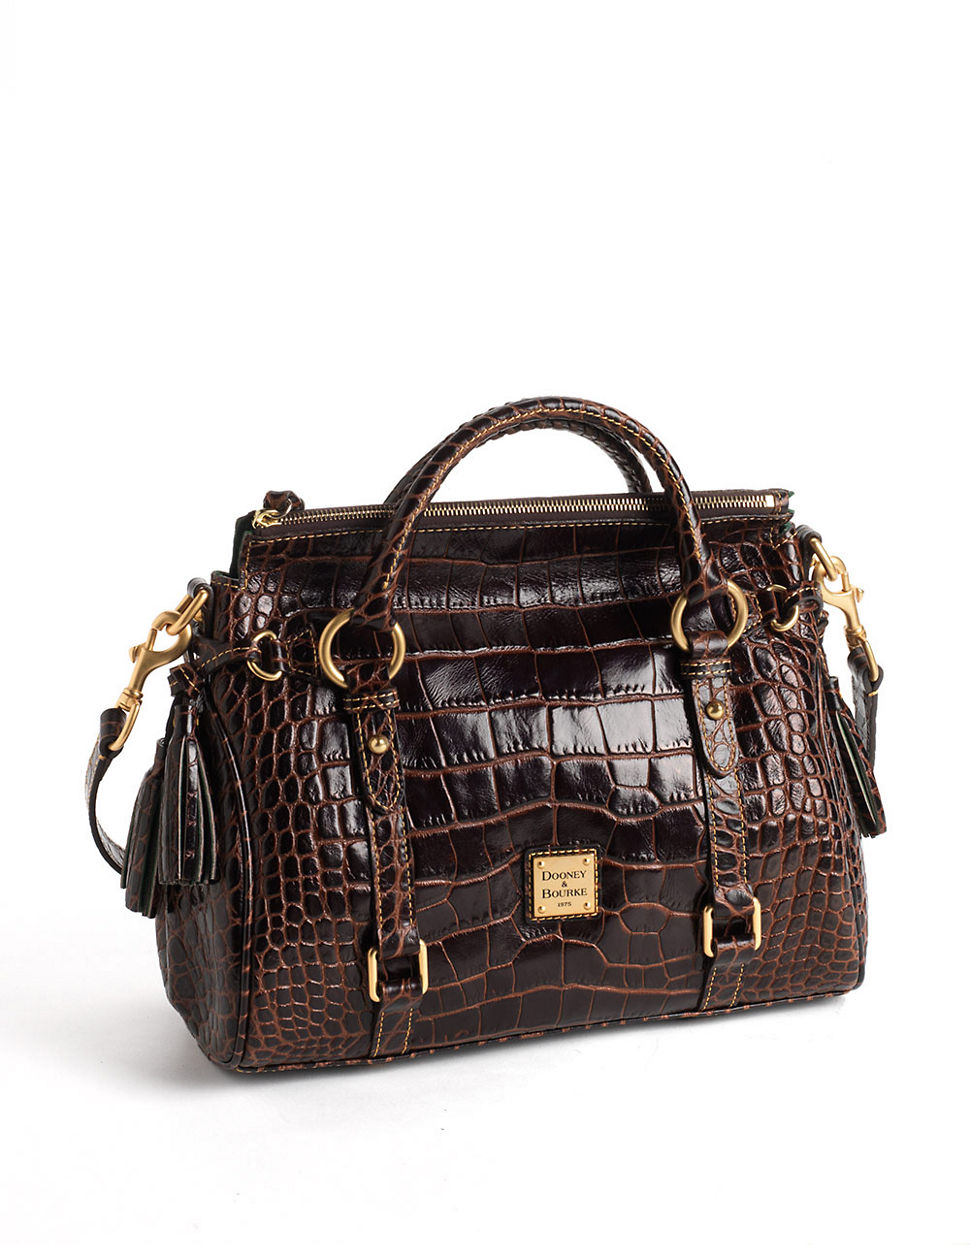 Dooney & Bourke Croc-Embossed Small Leather Satchel Bag in Brown - Lyst